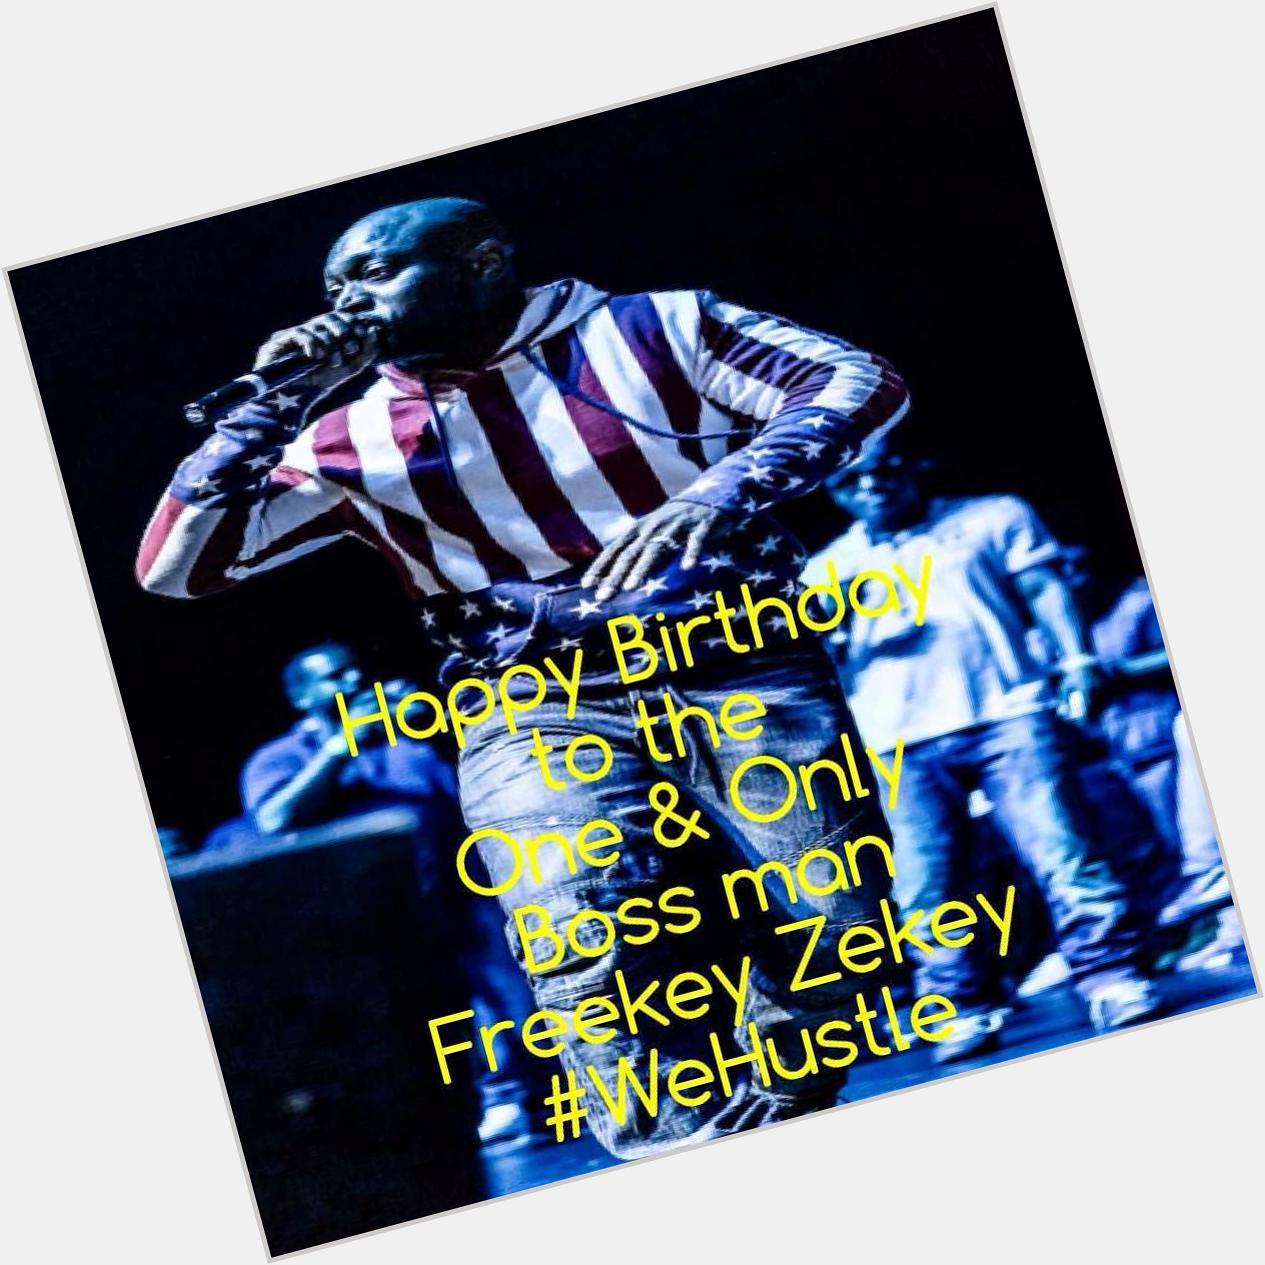 Happy Birthday
to the 
One & Only
Boss man Freekey Zekey     